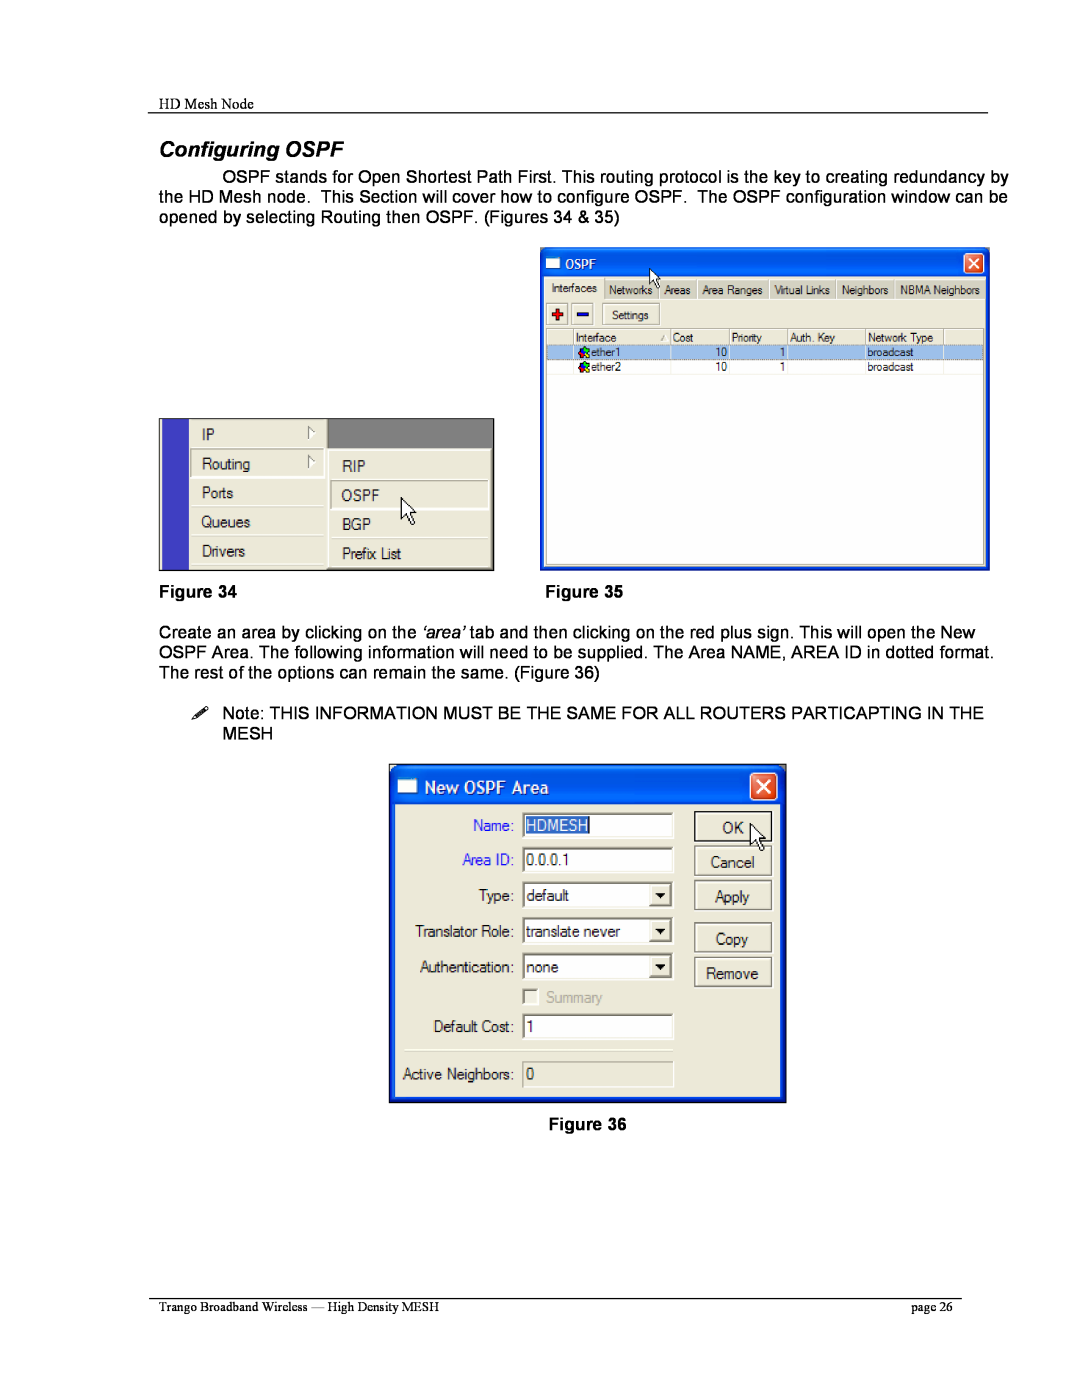 Trango Broadband High Density Mesh System user manual Configuring OSPF 